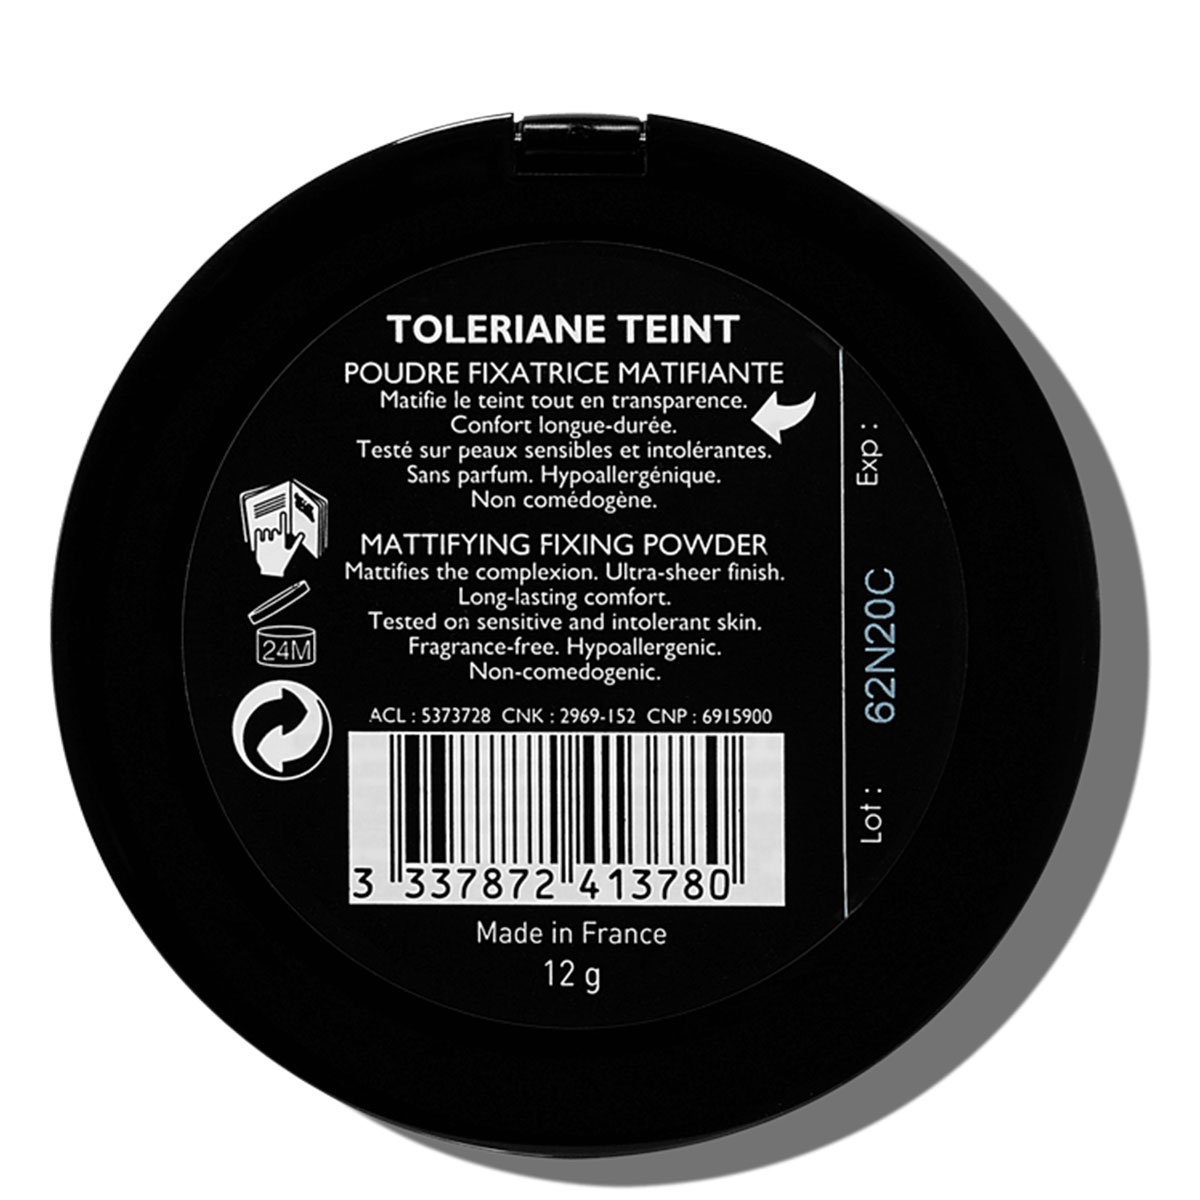 La Roche Posay Sensitive Toleriane Make up TEINT Fixation 3337872413780